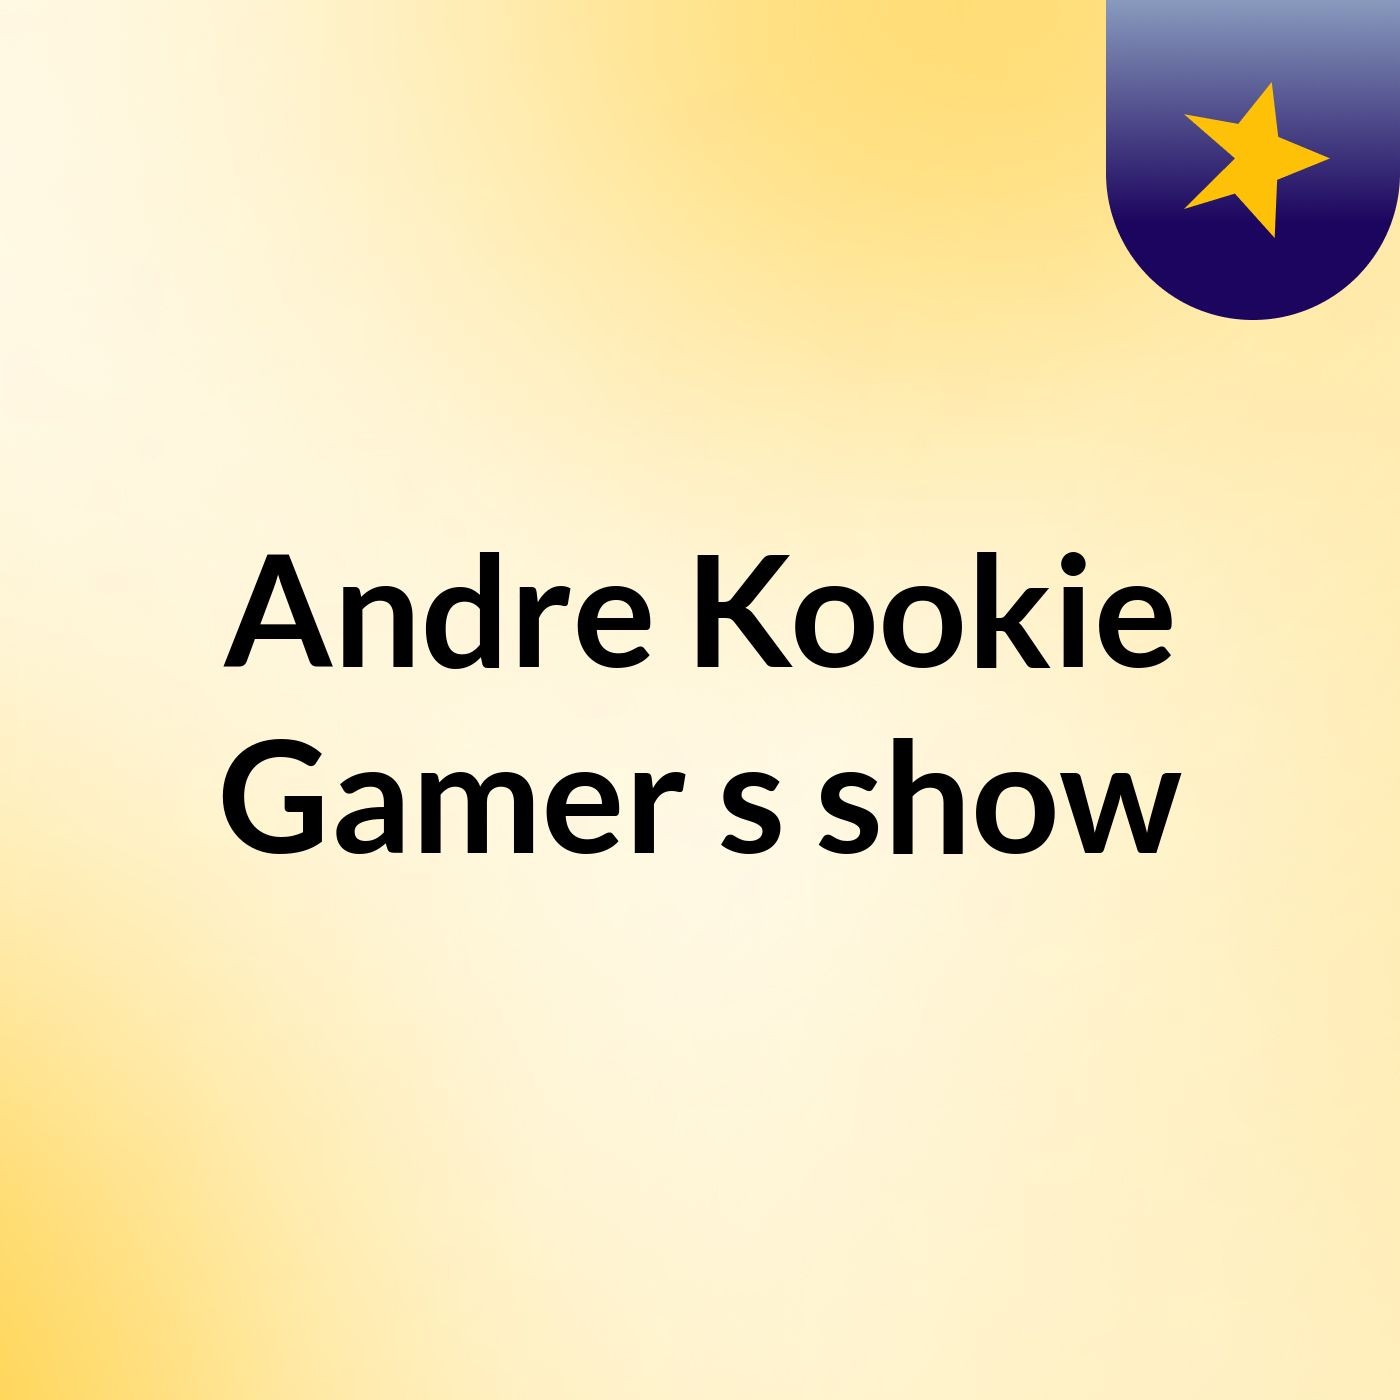 Andre Kookie Gamer's show